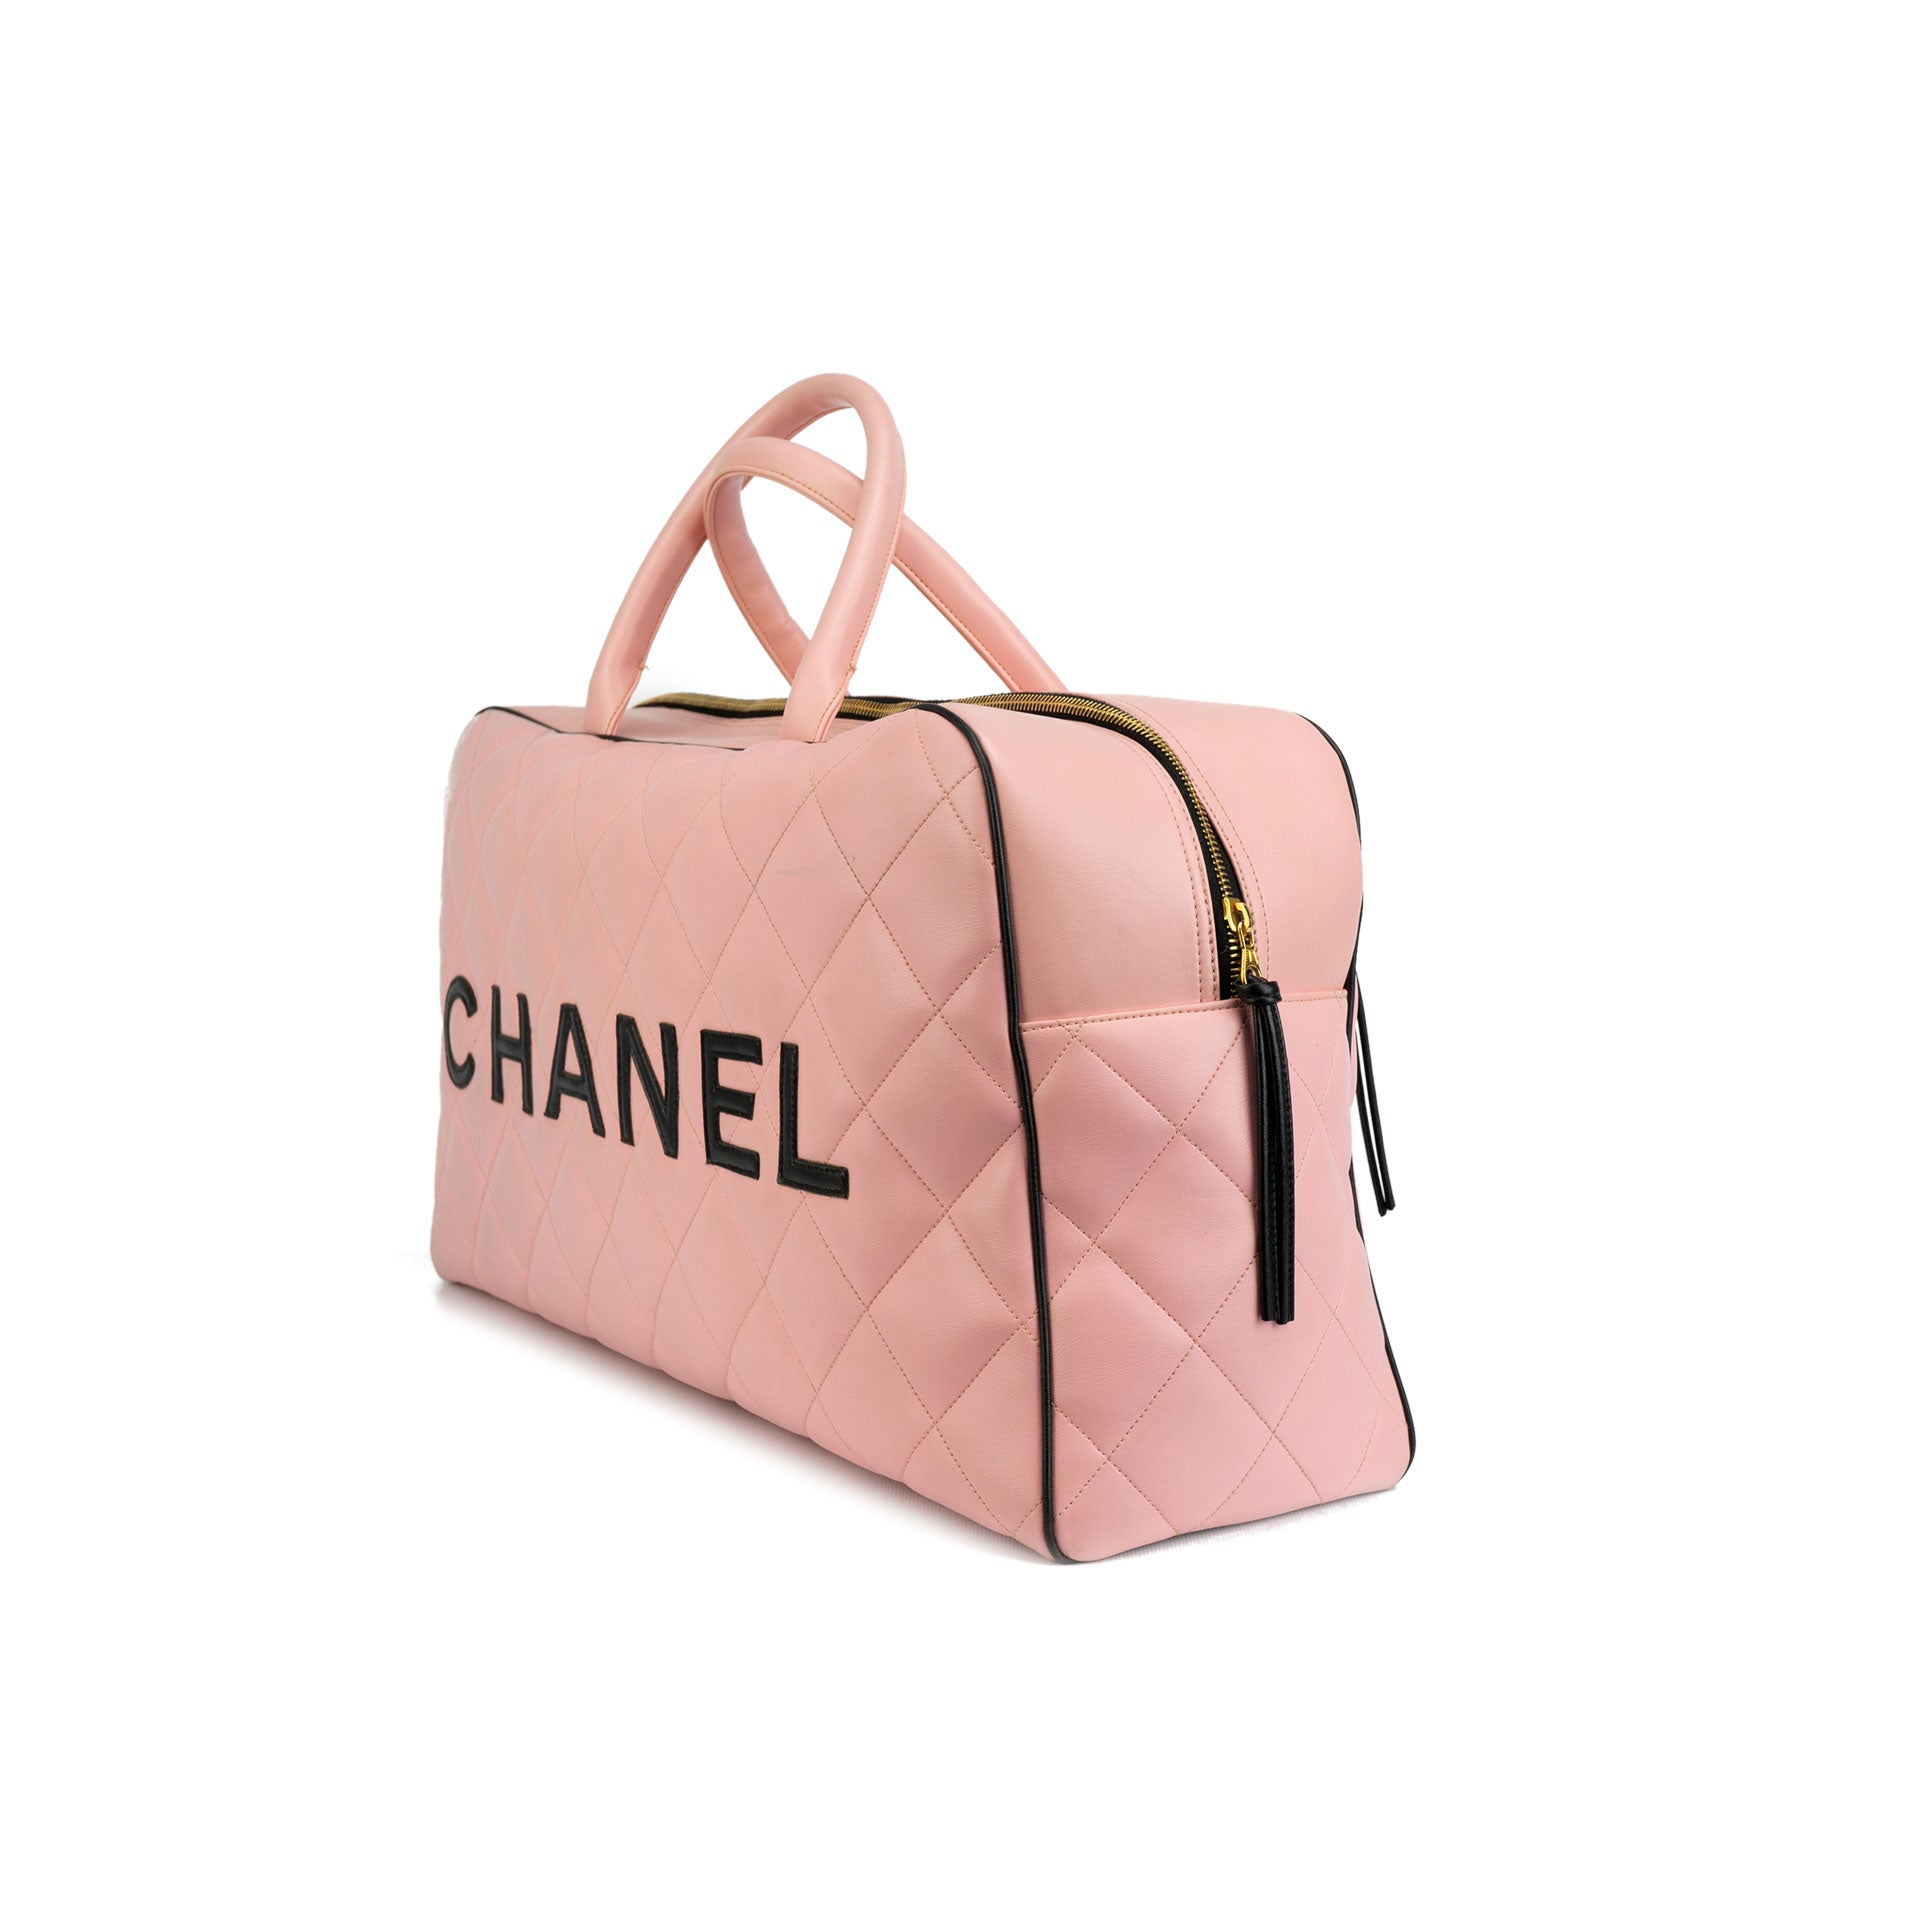 Chanel Pink Vintage Overnight Duffel Bag